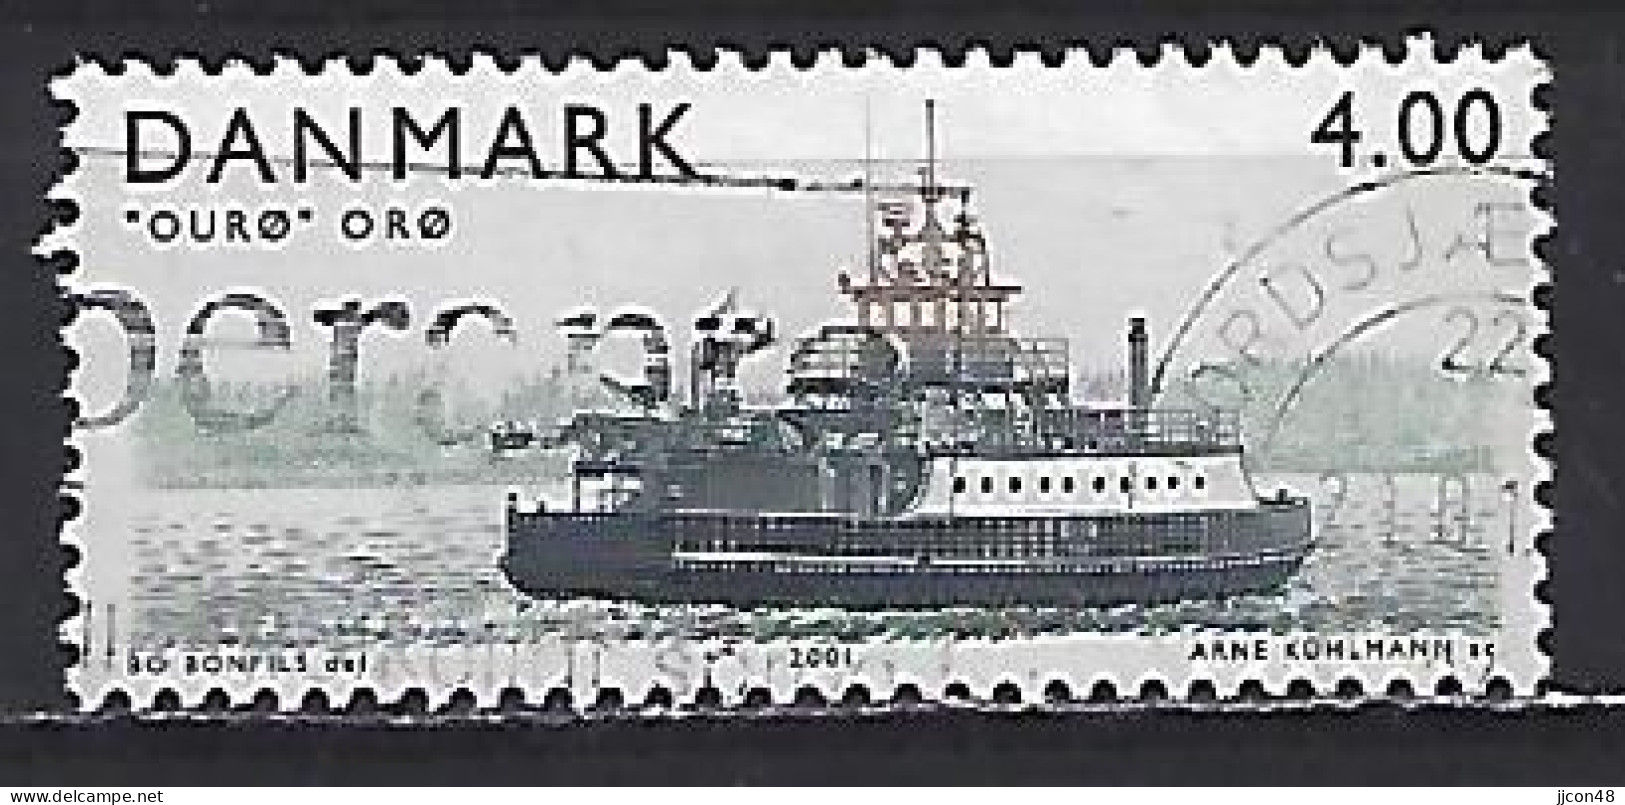 Denmark  2001  Island Ferries   (o) Mi.1292 - Used Stamps